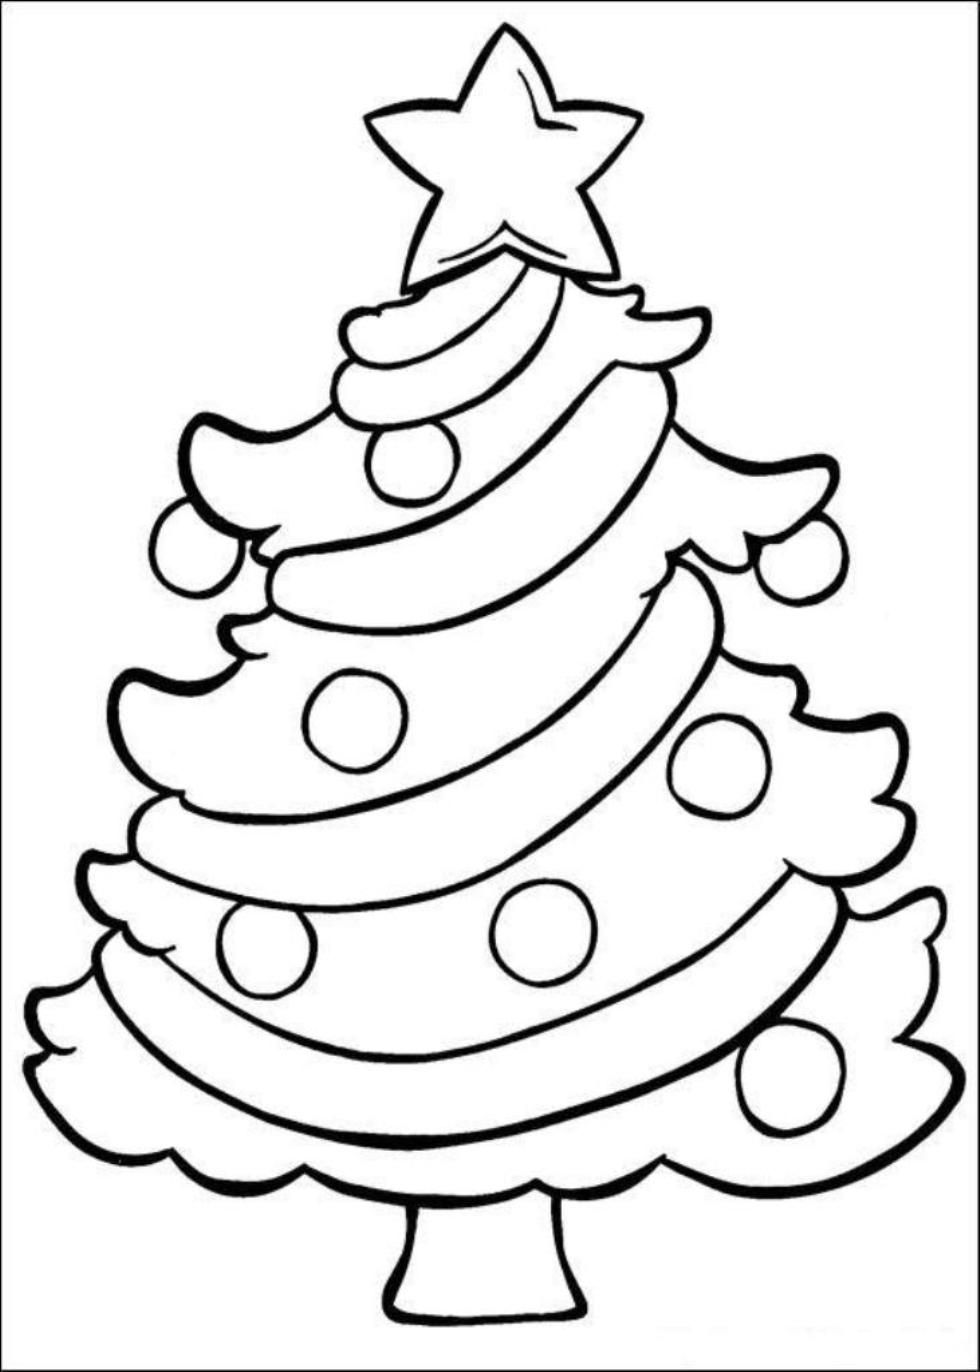 Download 50 Christmas Tree Printable Templates | KittyBabyLove.com